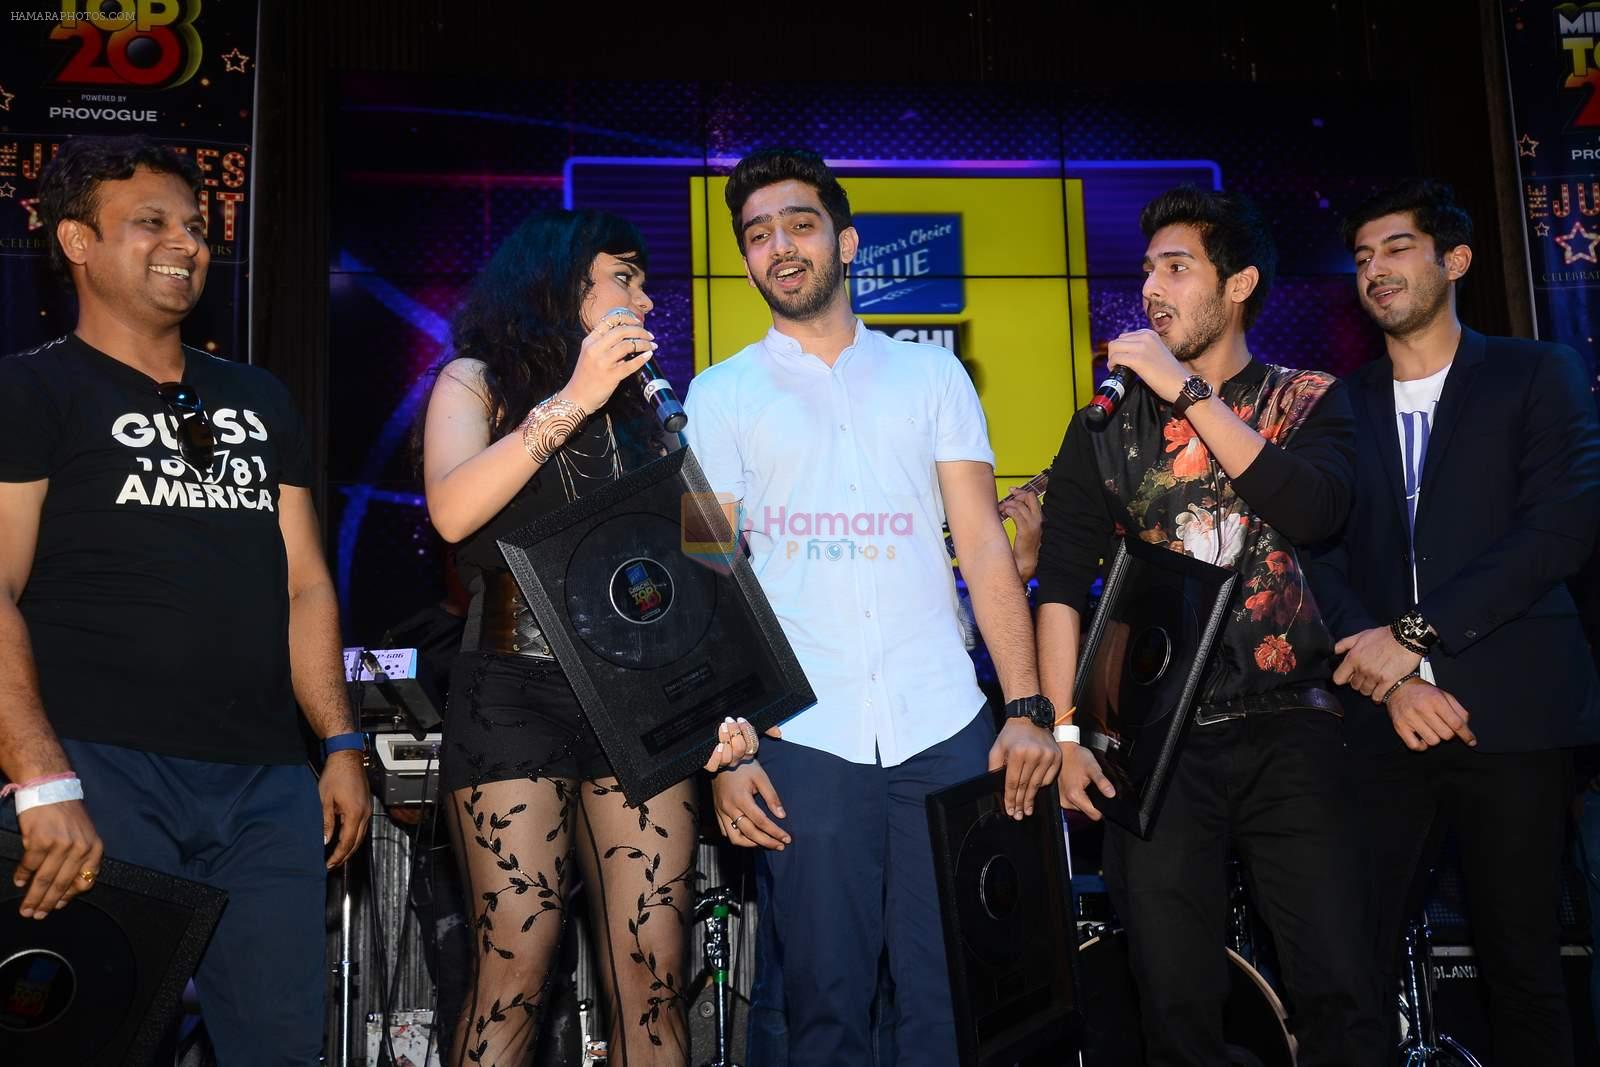 Aditi Singh Sharma at Radio Mirchi Top 20 Awards in Hard Rock Cafe on 20th May 2015